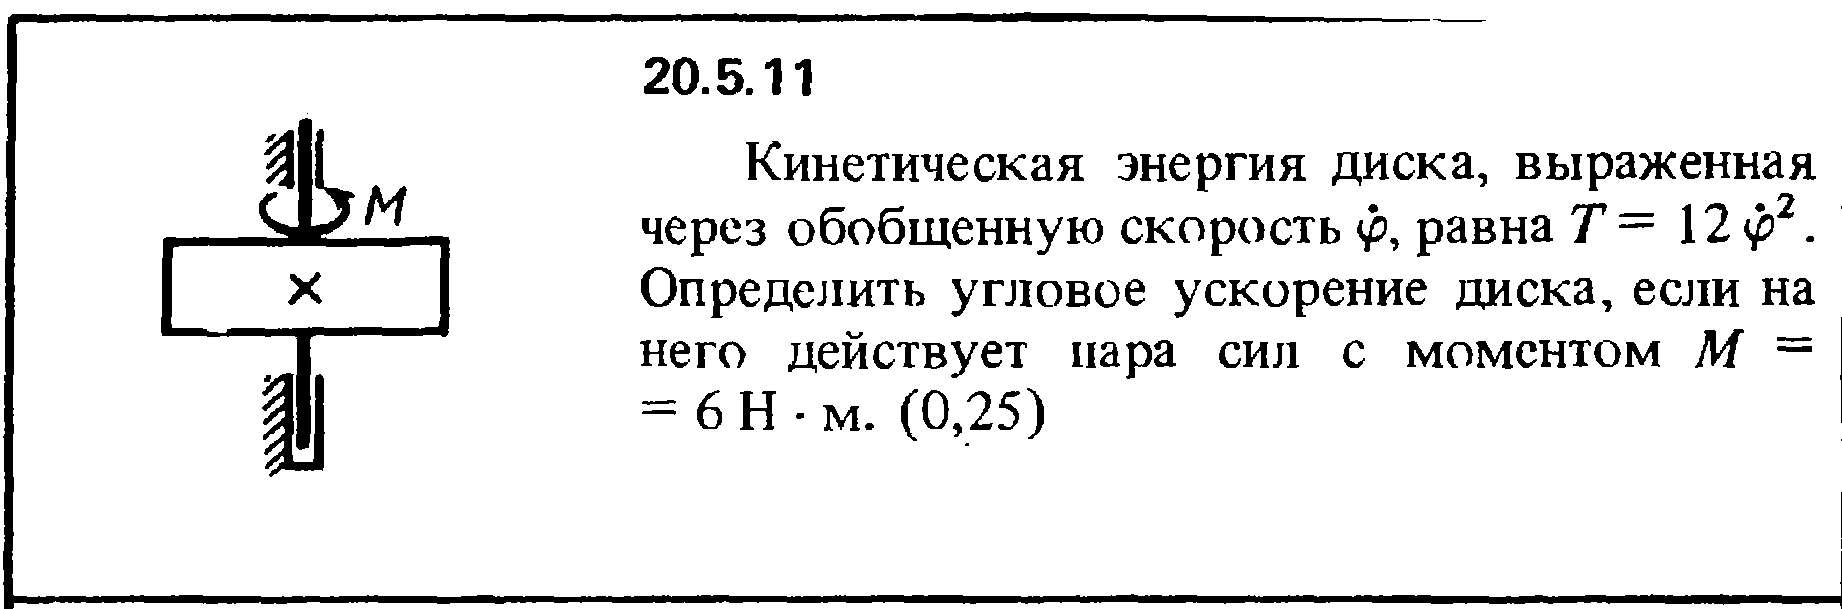 Решение 20.5.11 из сборника (решебника) Кепе О.Е. 1989